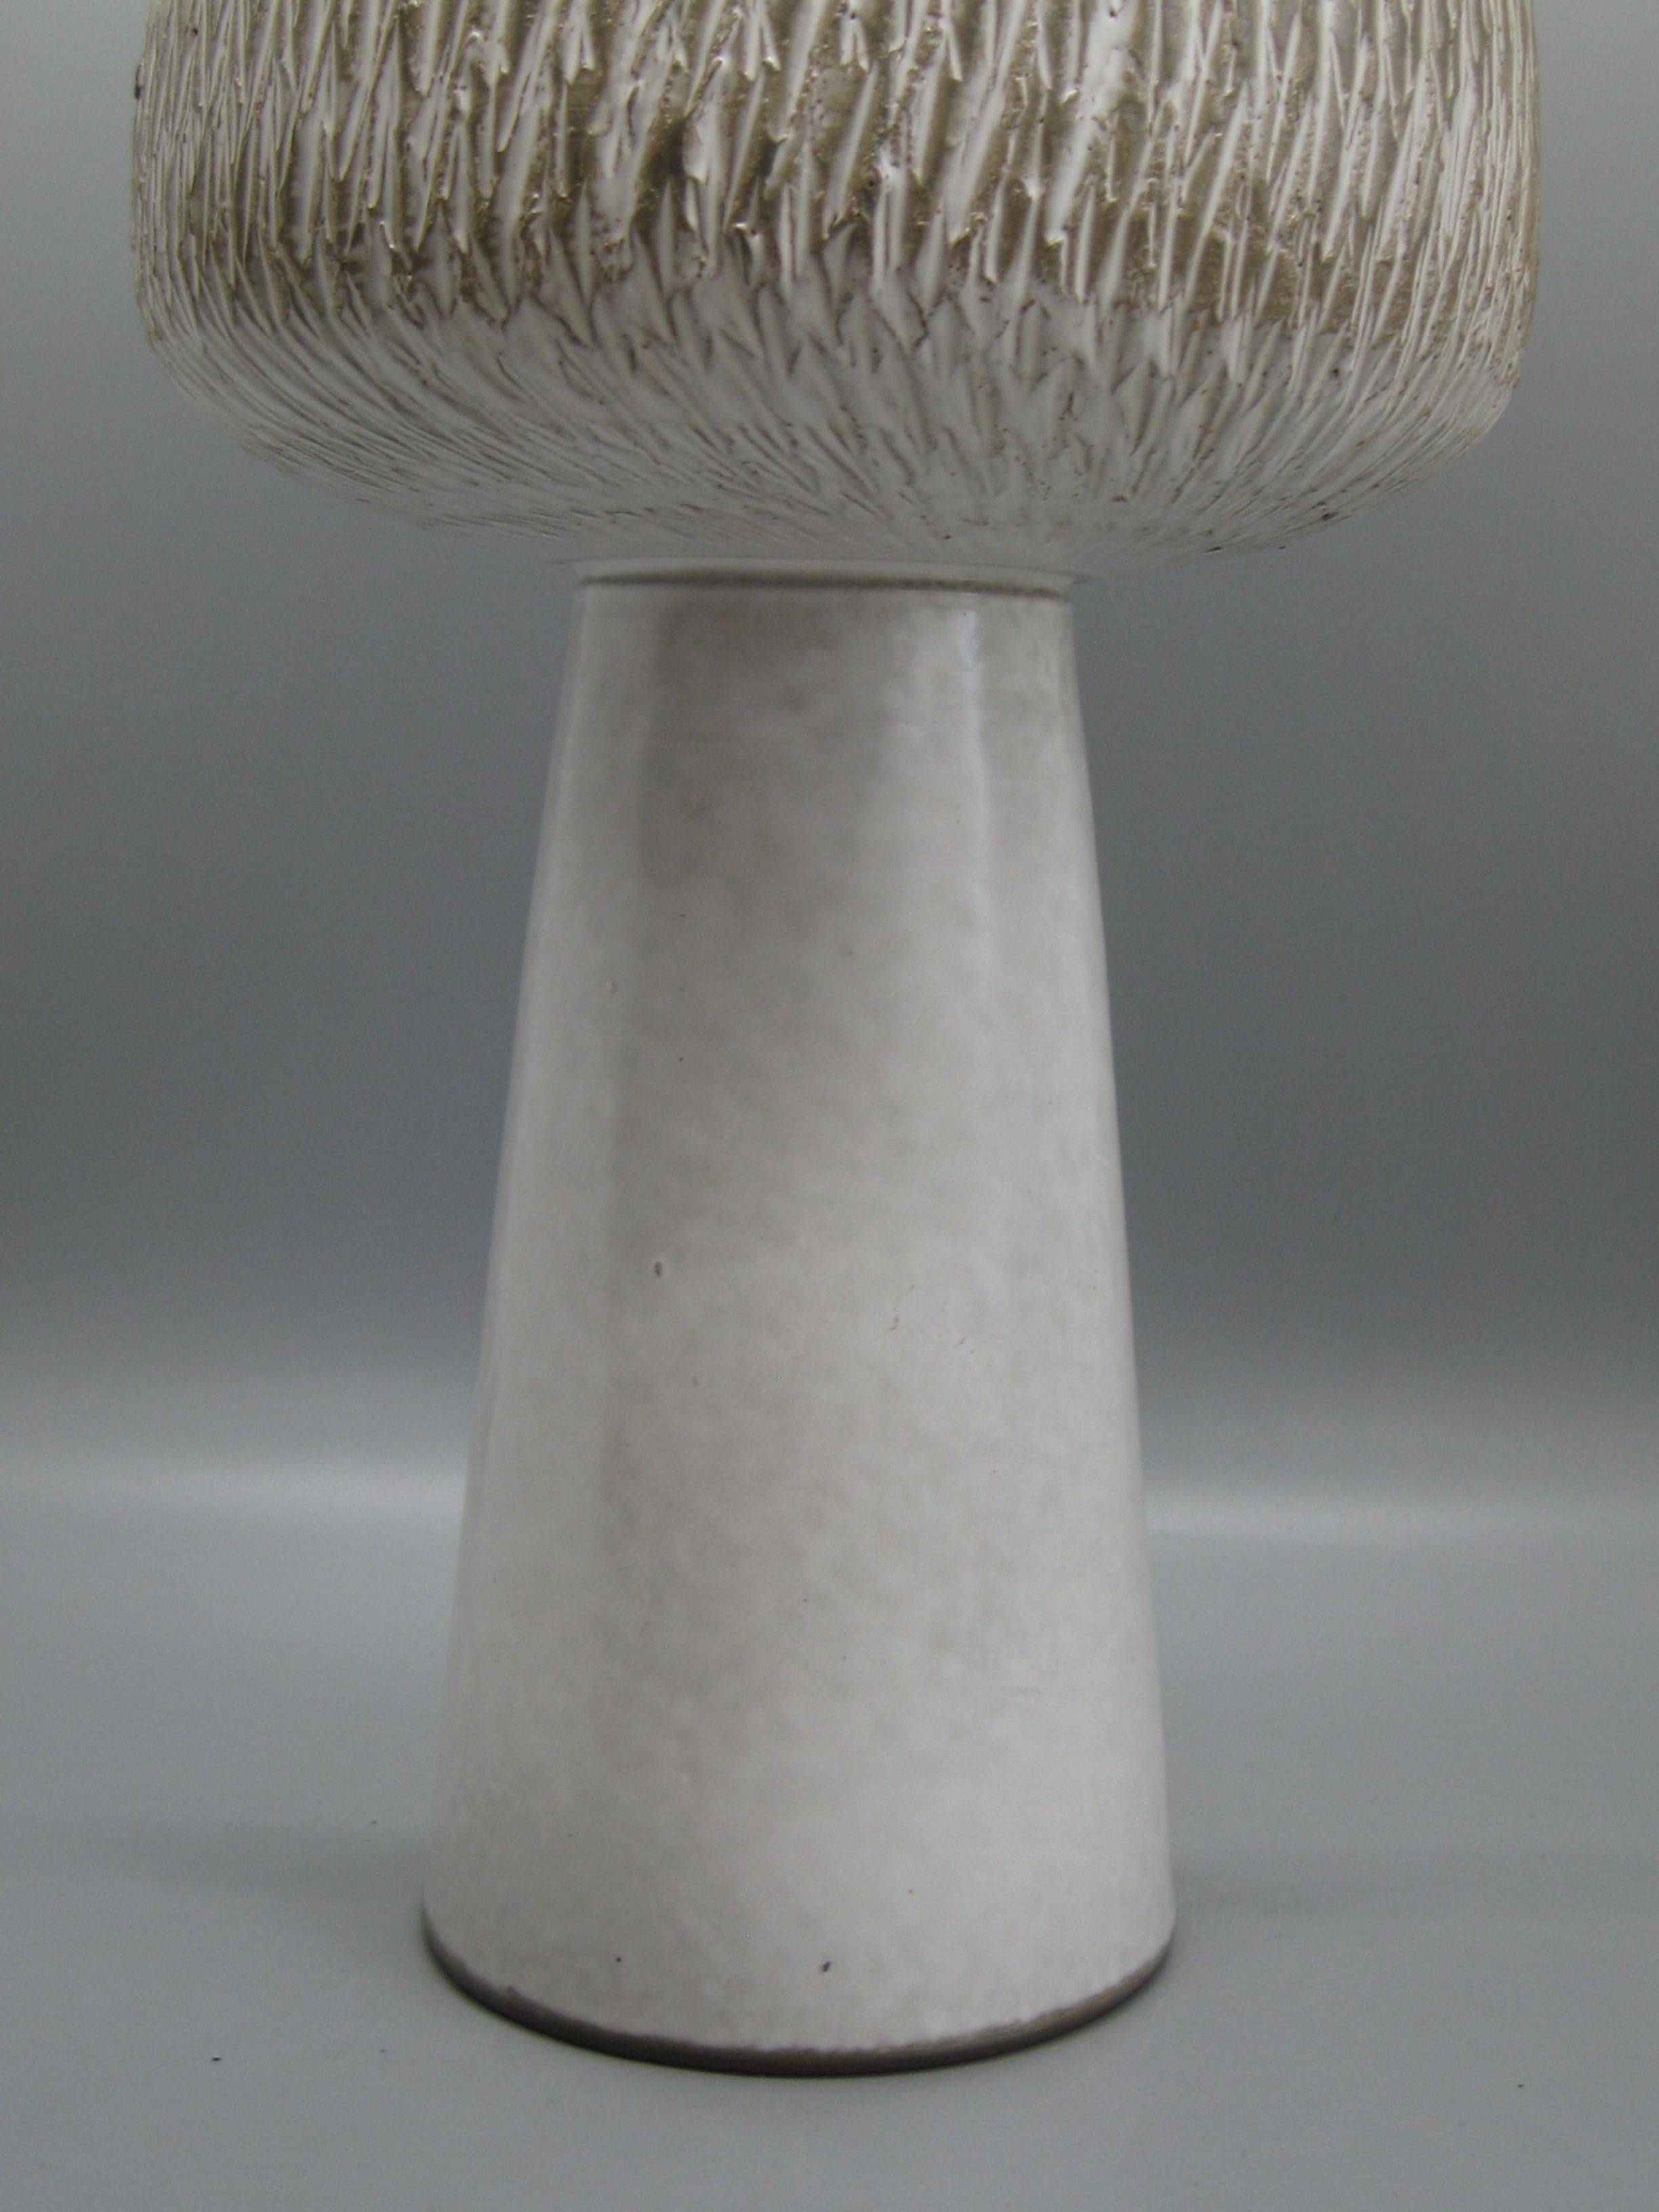 1960s Japanese Modernist Ikebana Ceramic Pottery Sgraffito Pedestal Vase Vessel For Sale 1